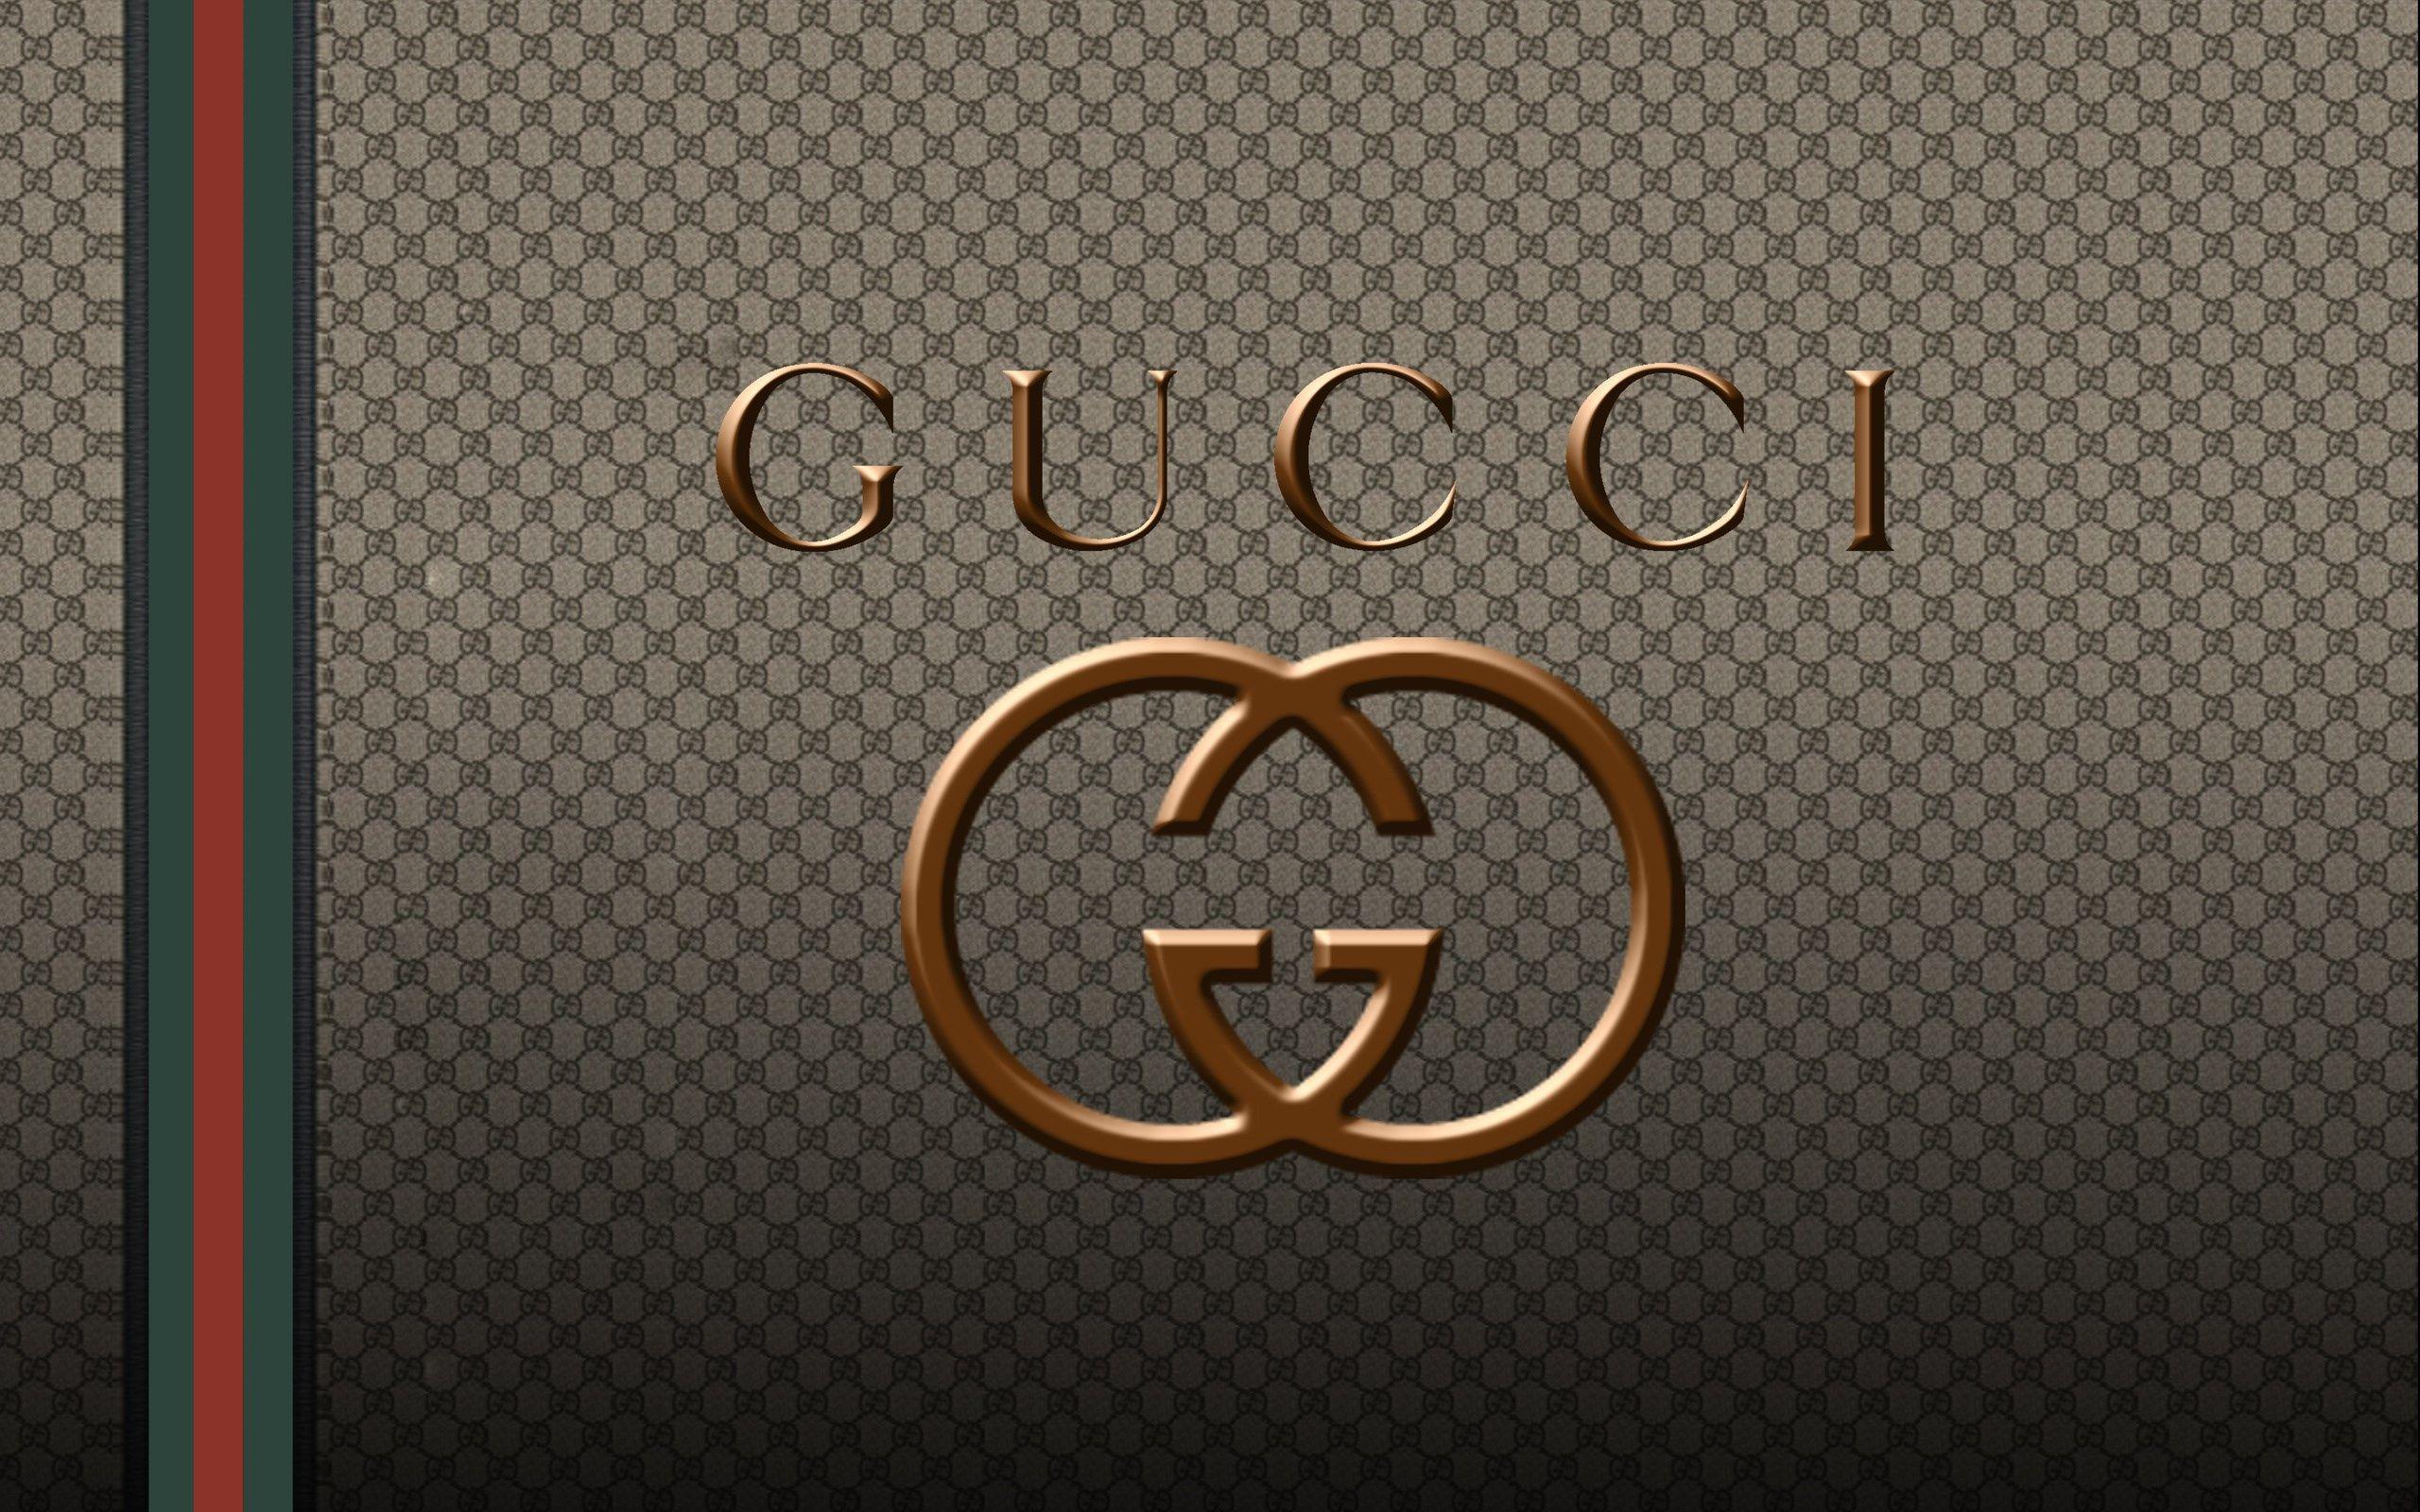 gucci hd logo